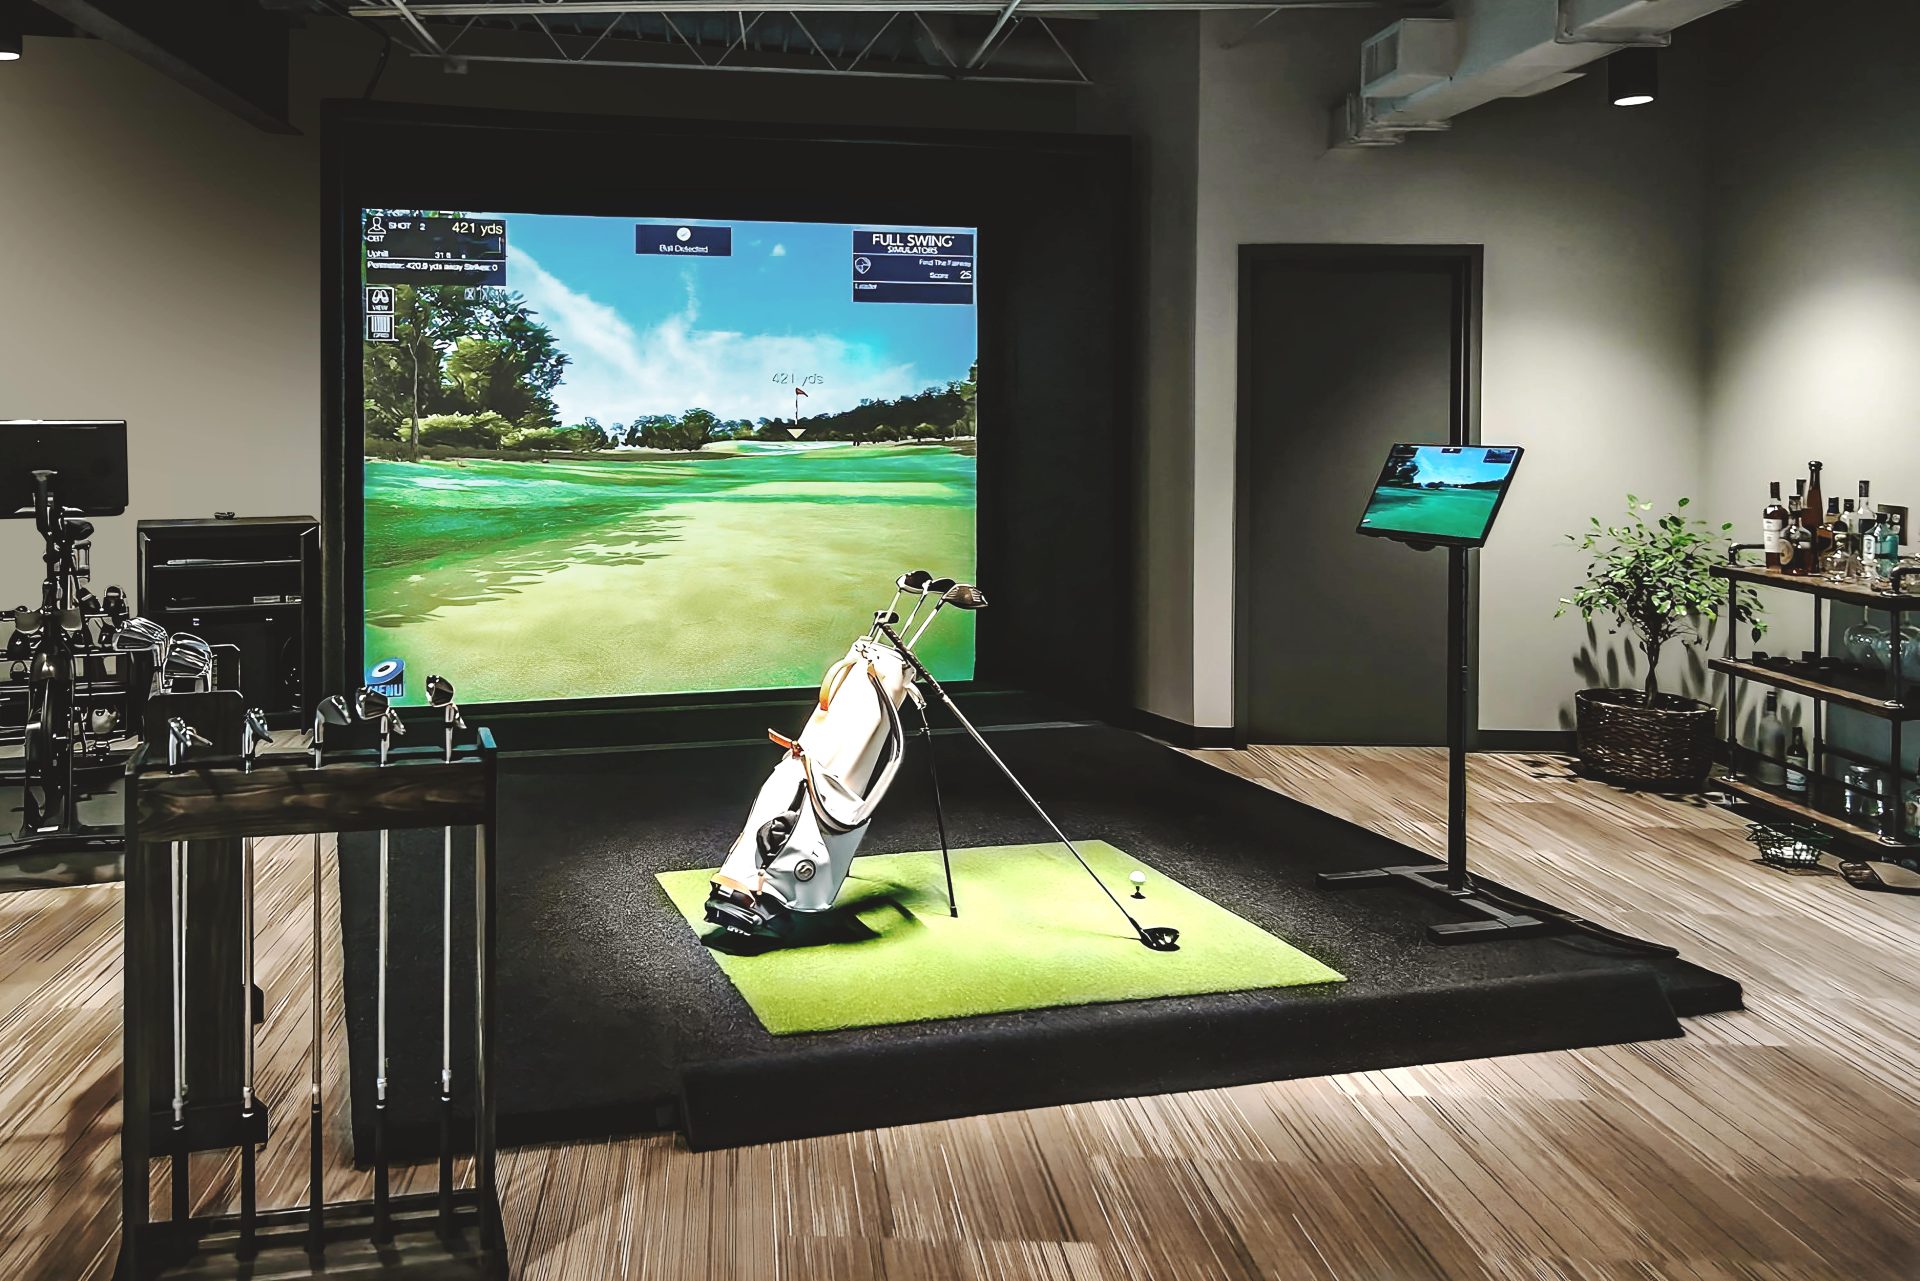 The #1 Best Golf Simulator for Home | CO-DA Smart Technology